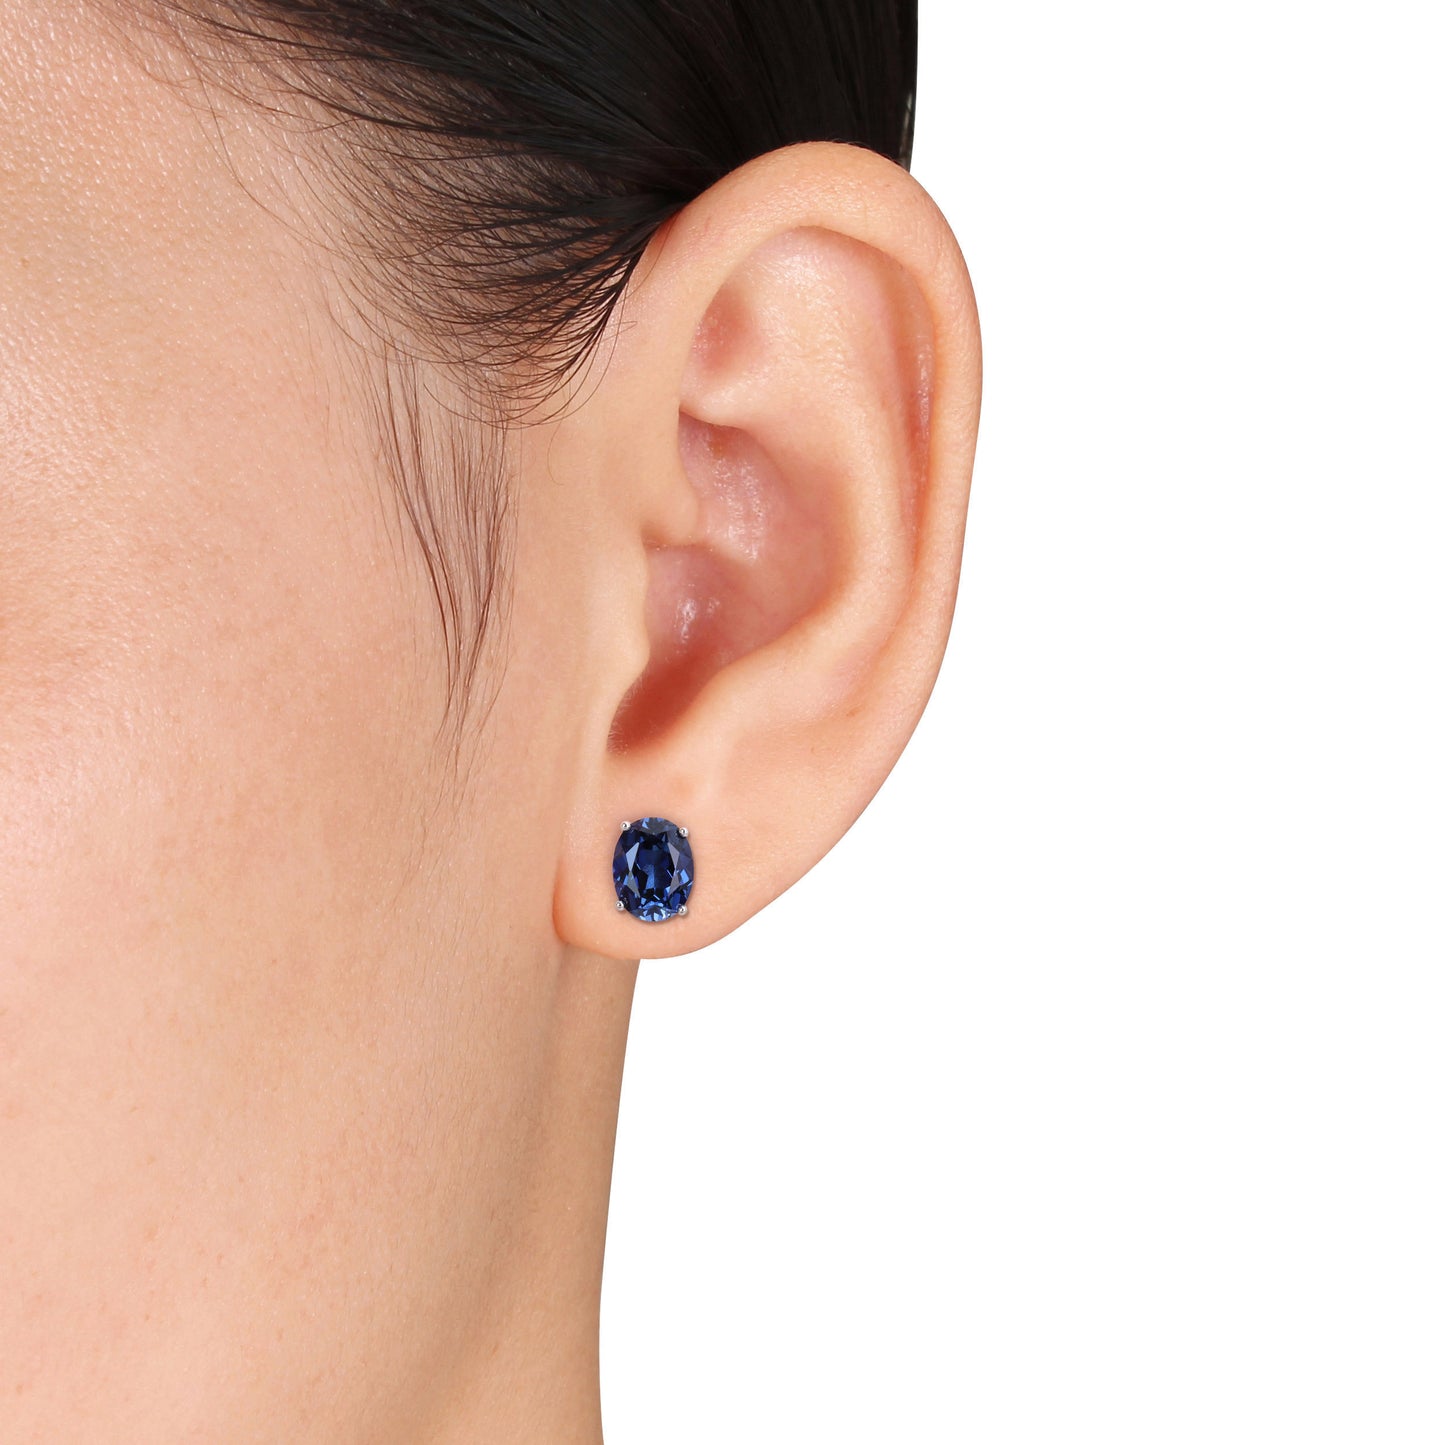 5 7/8 ct TGW Created blue sapphire fashion post earrings silver